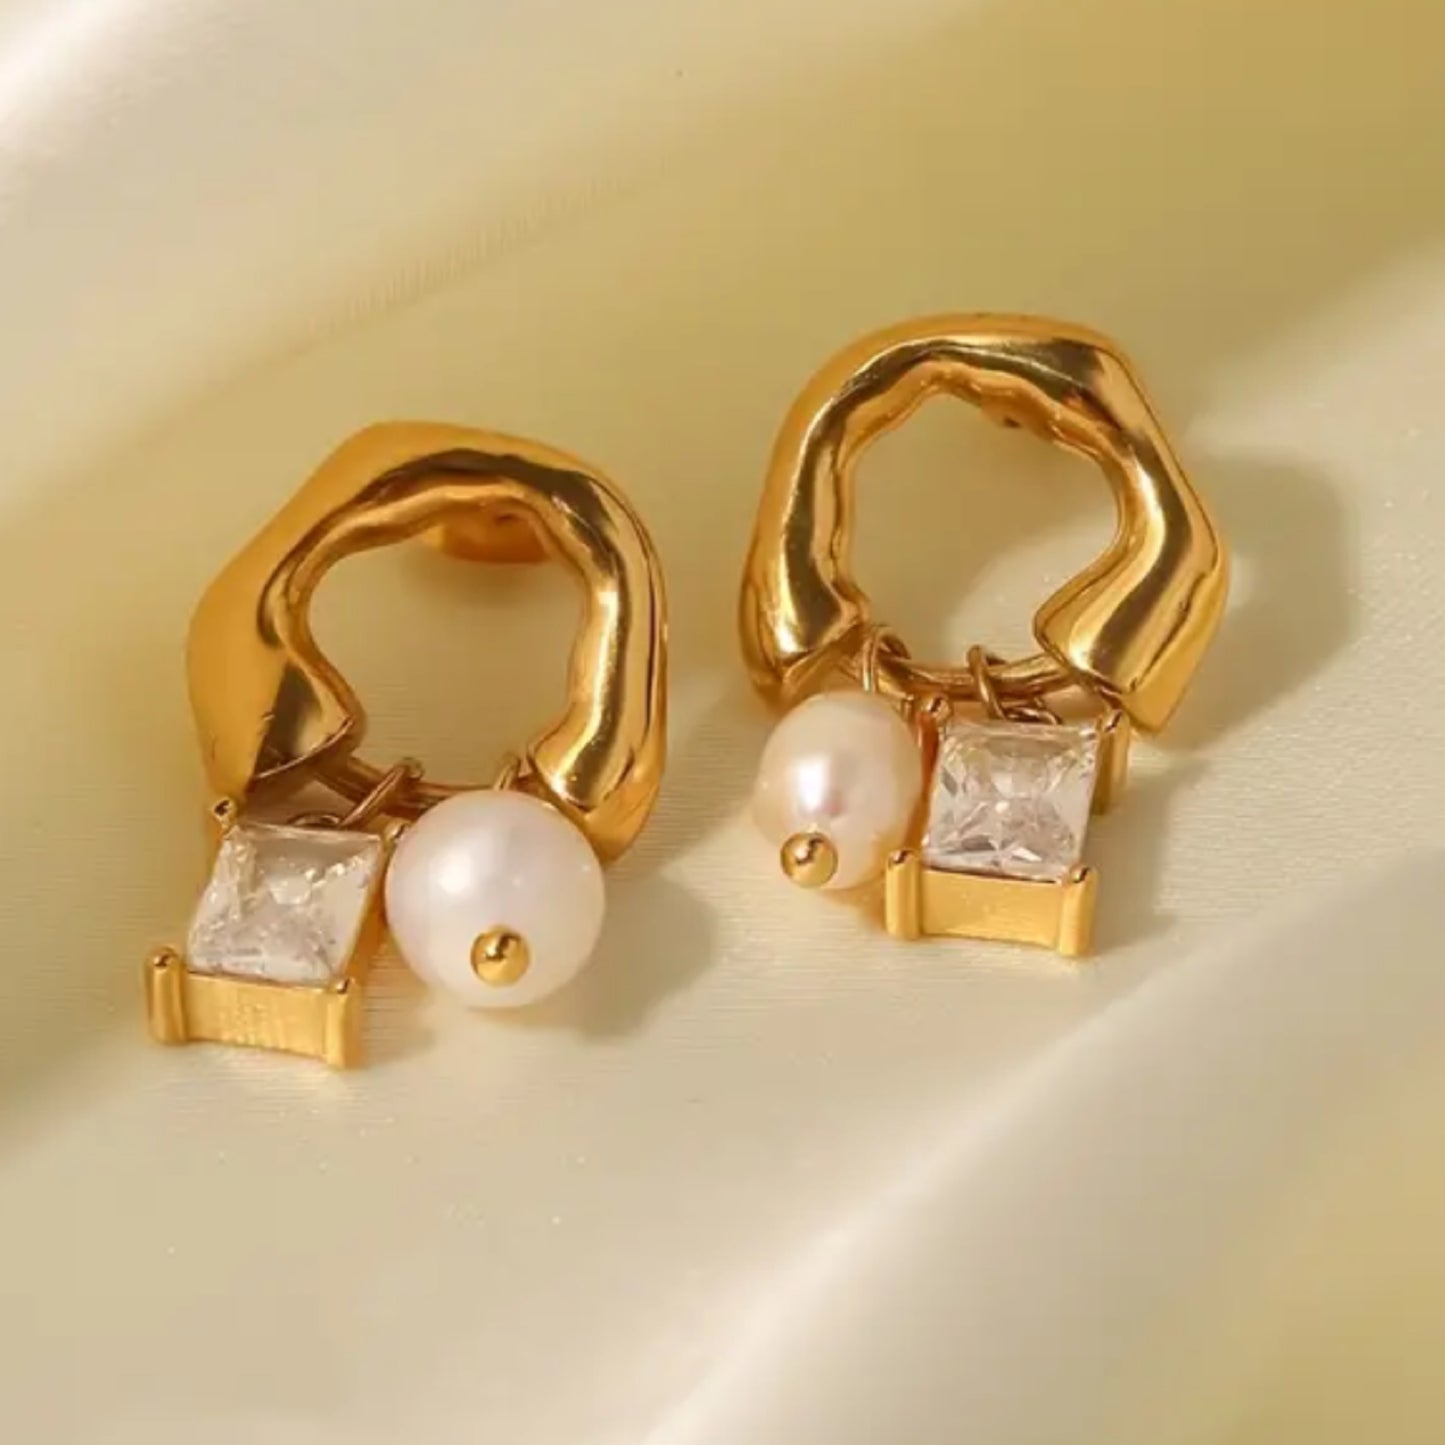 Pearl and Gem dangle earrings